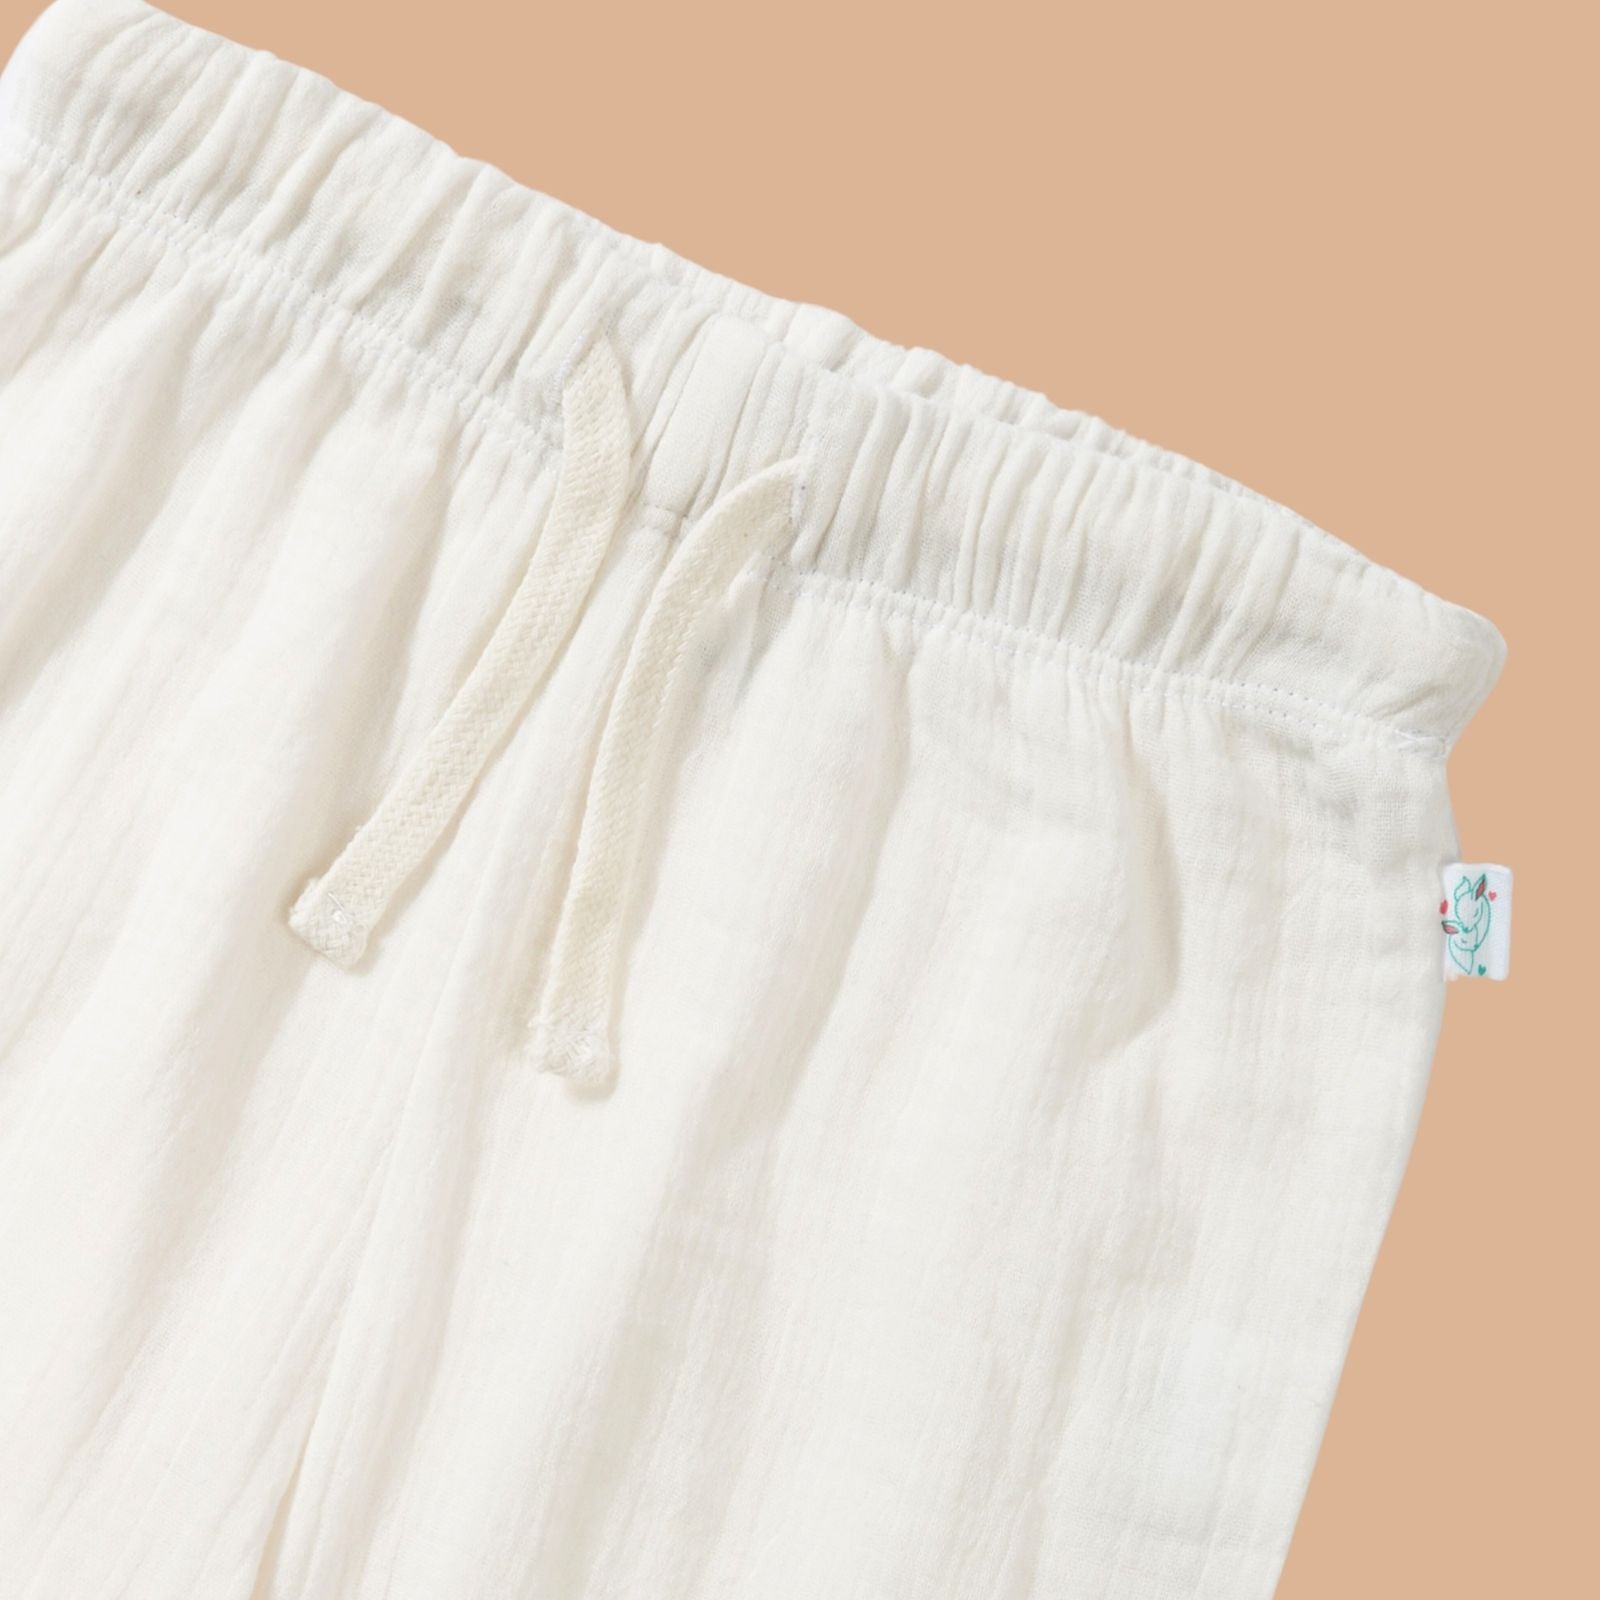 Greendeer Marigold Yellow Kurta with White Pants in Cotton